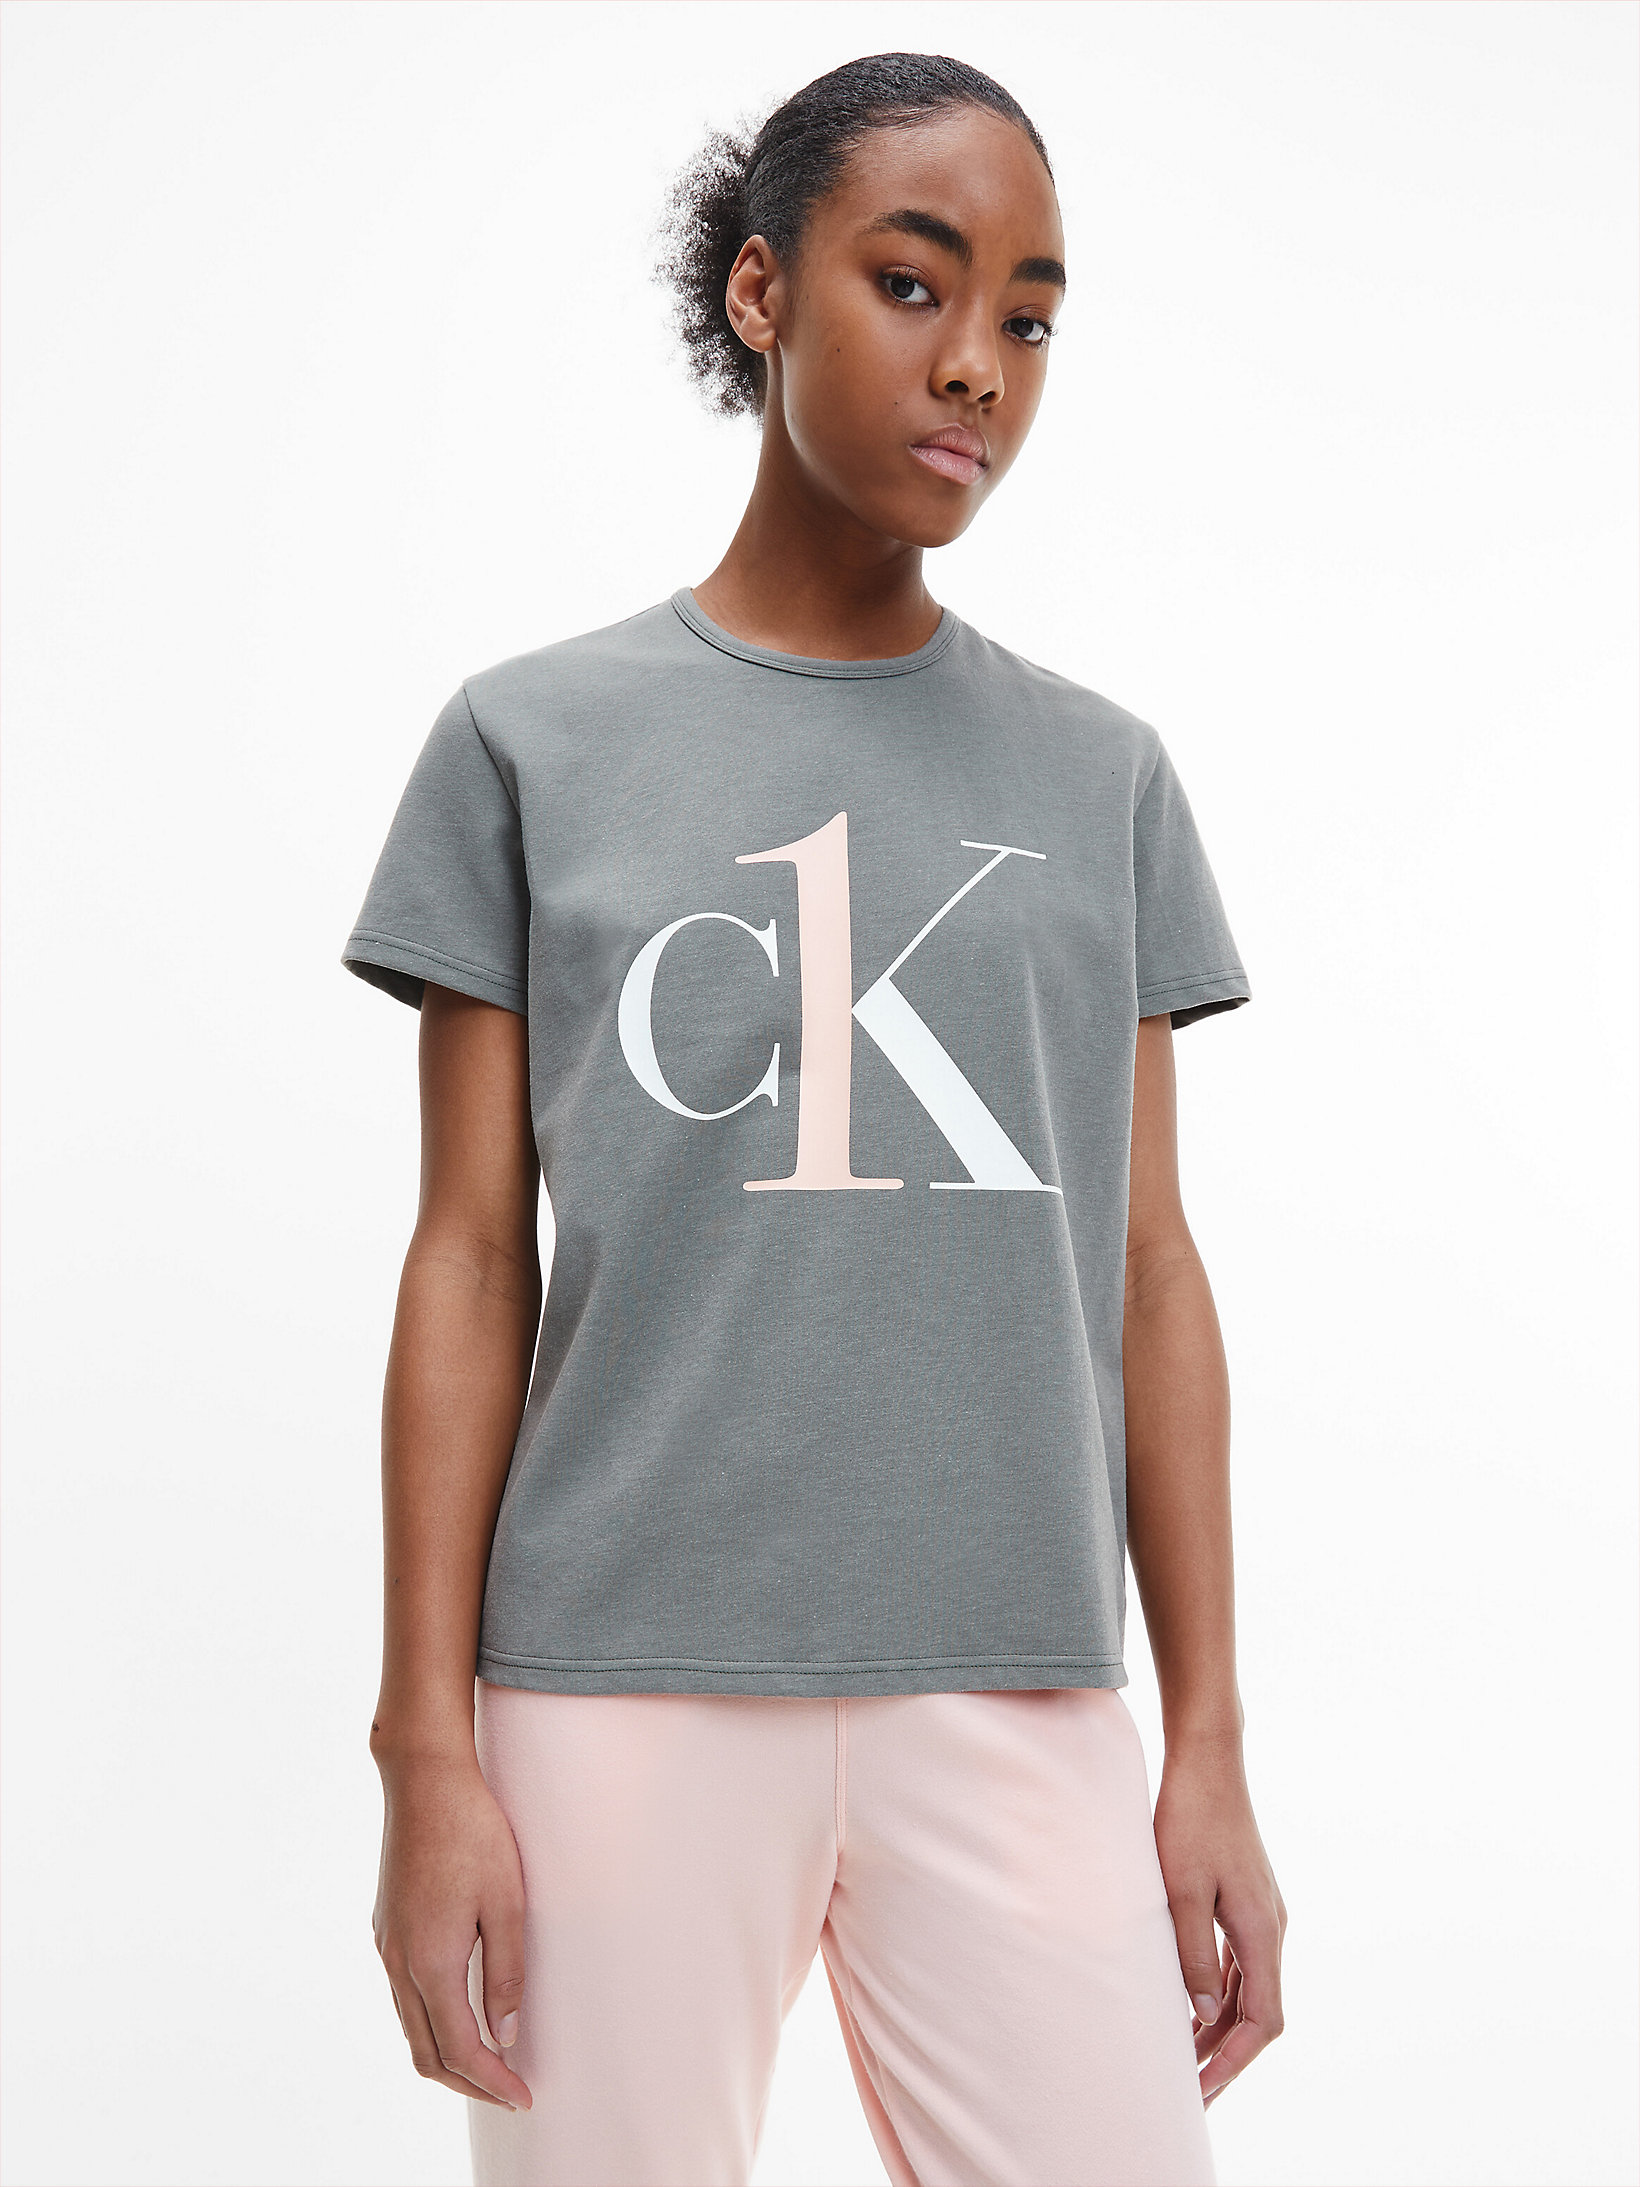 New Slate Heather_peach Melba Logo > Пижамный топ - CK One > undefined Женщины - Calvin Klein